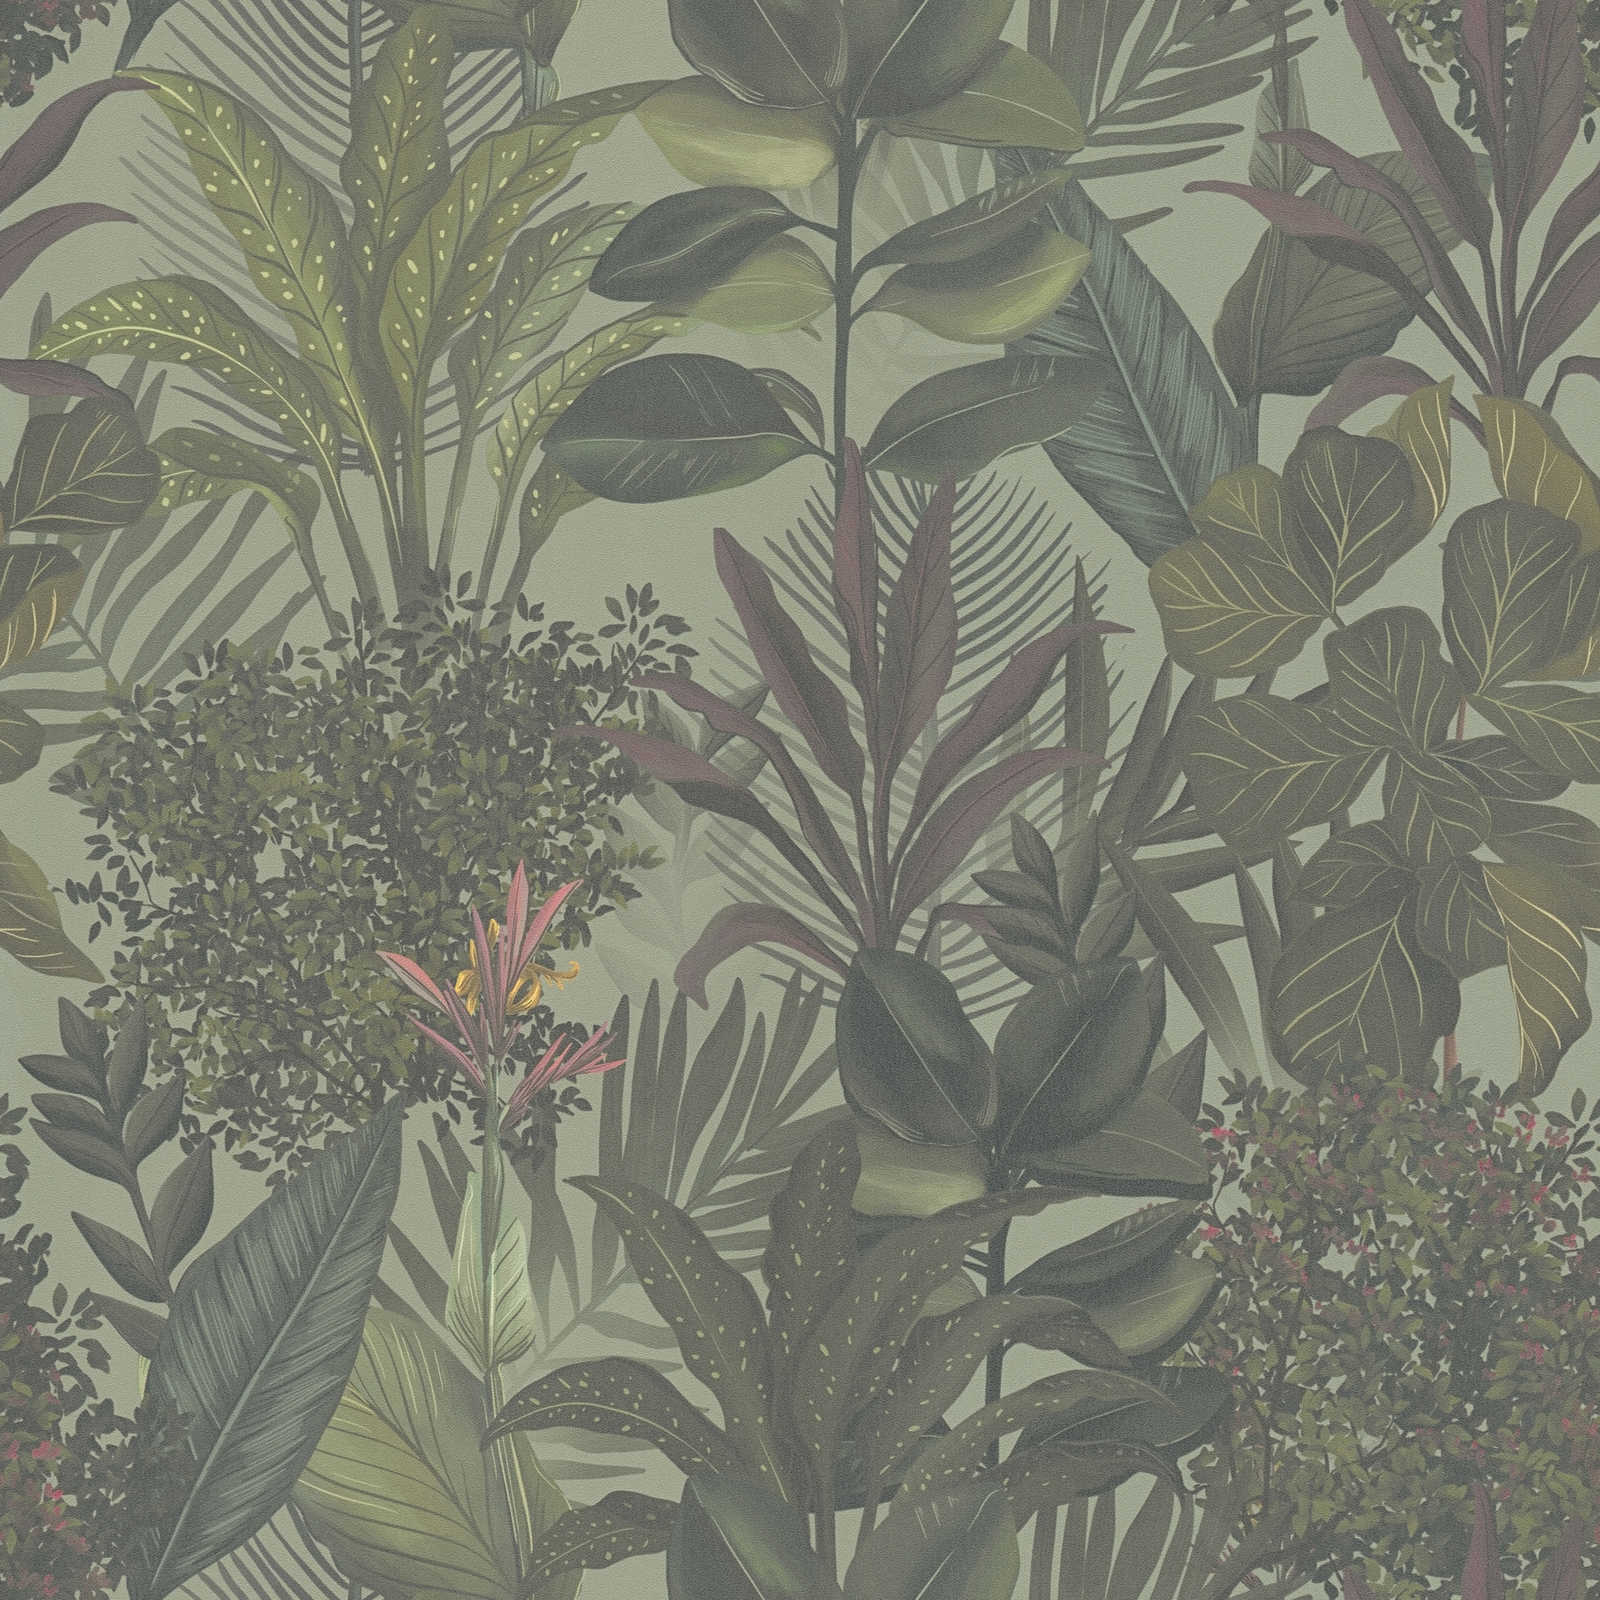             Moderne Tapete floral mit Blättern & Gräsern strukturiert matt – Grün, Dunkelgrün, Bordeaux
        